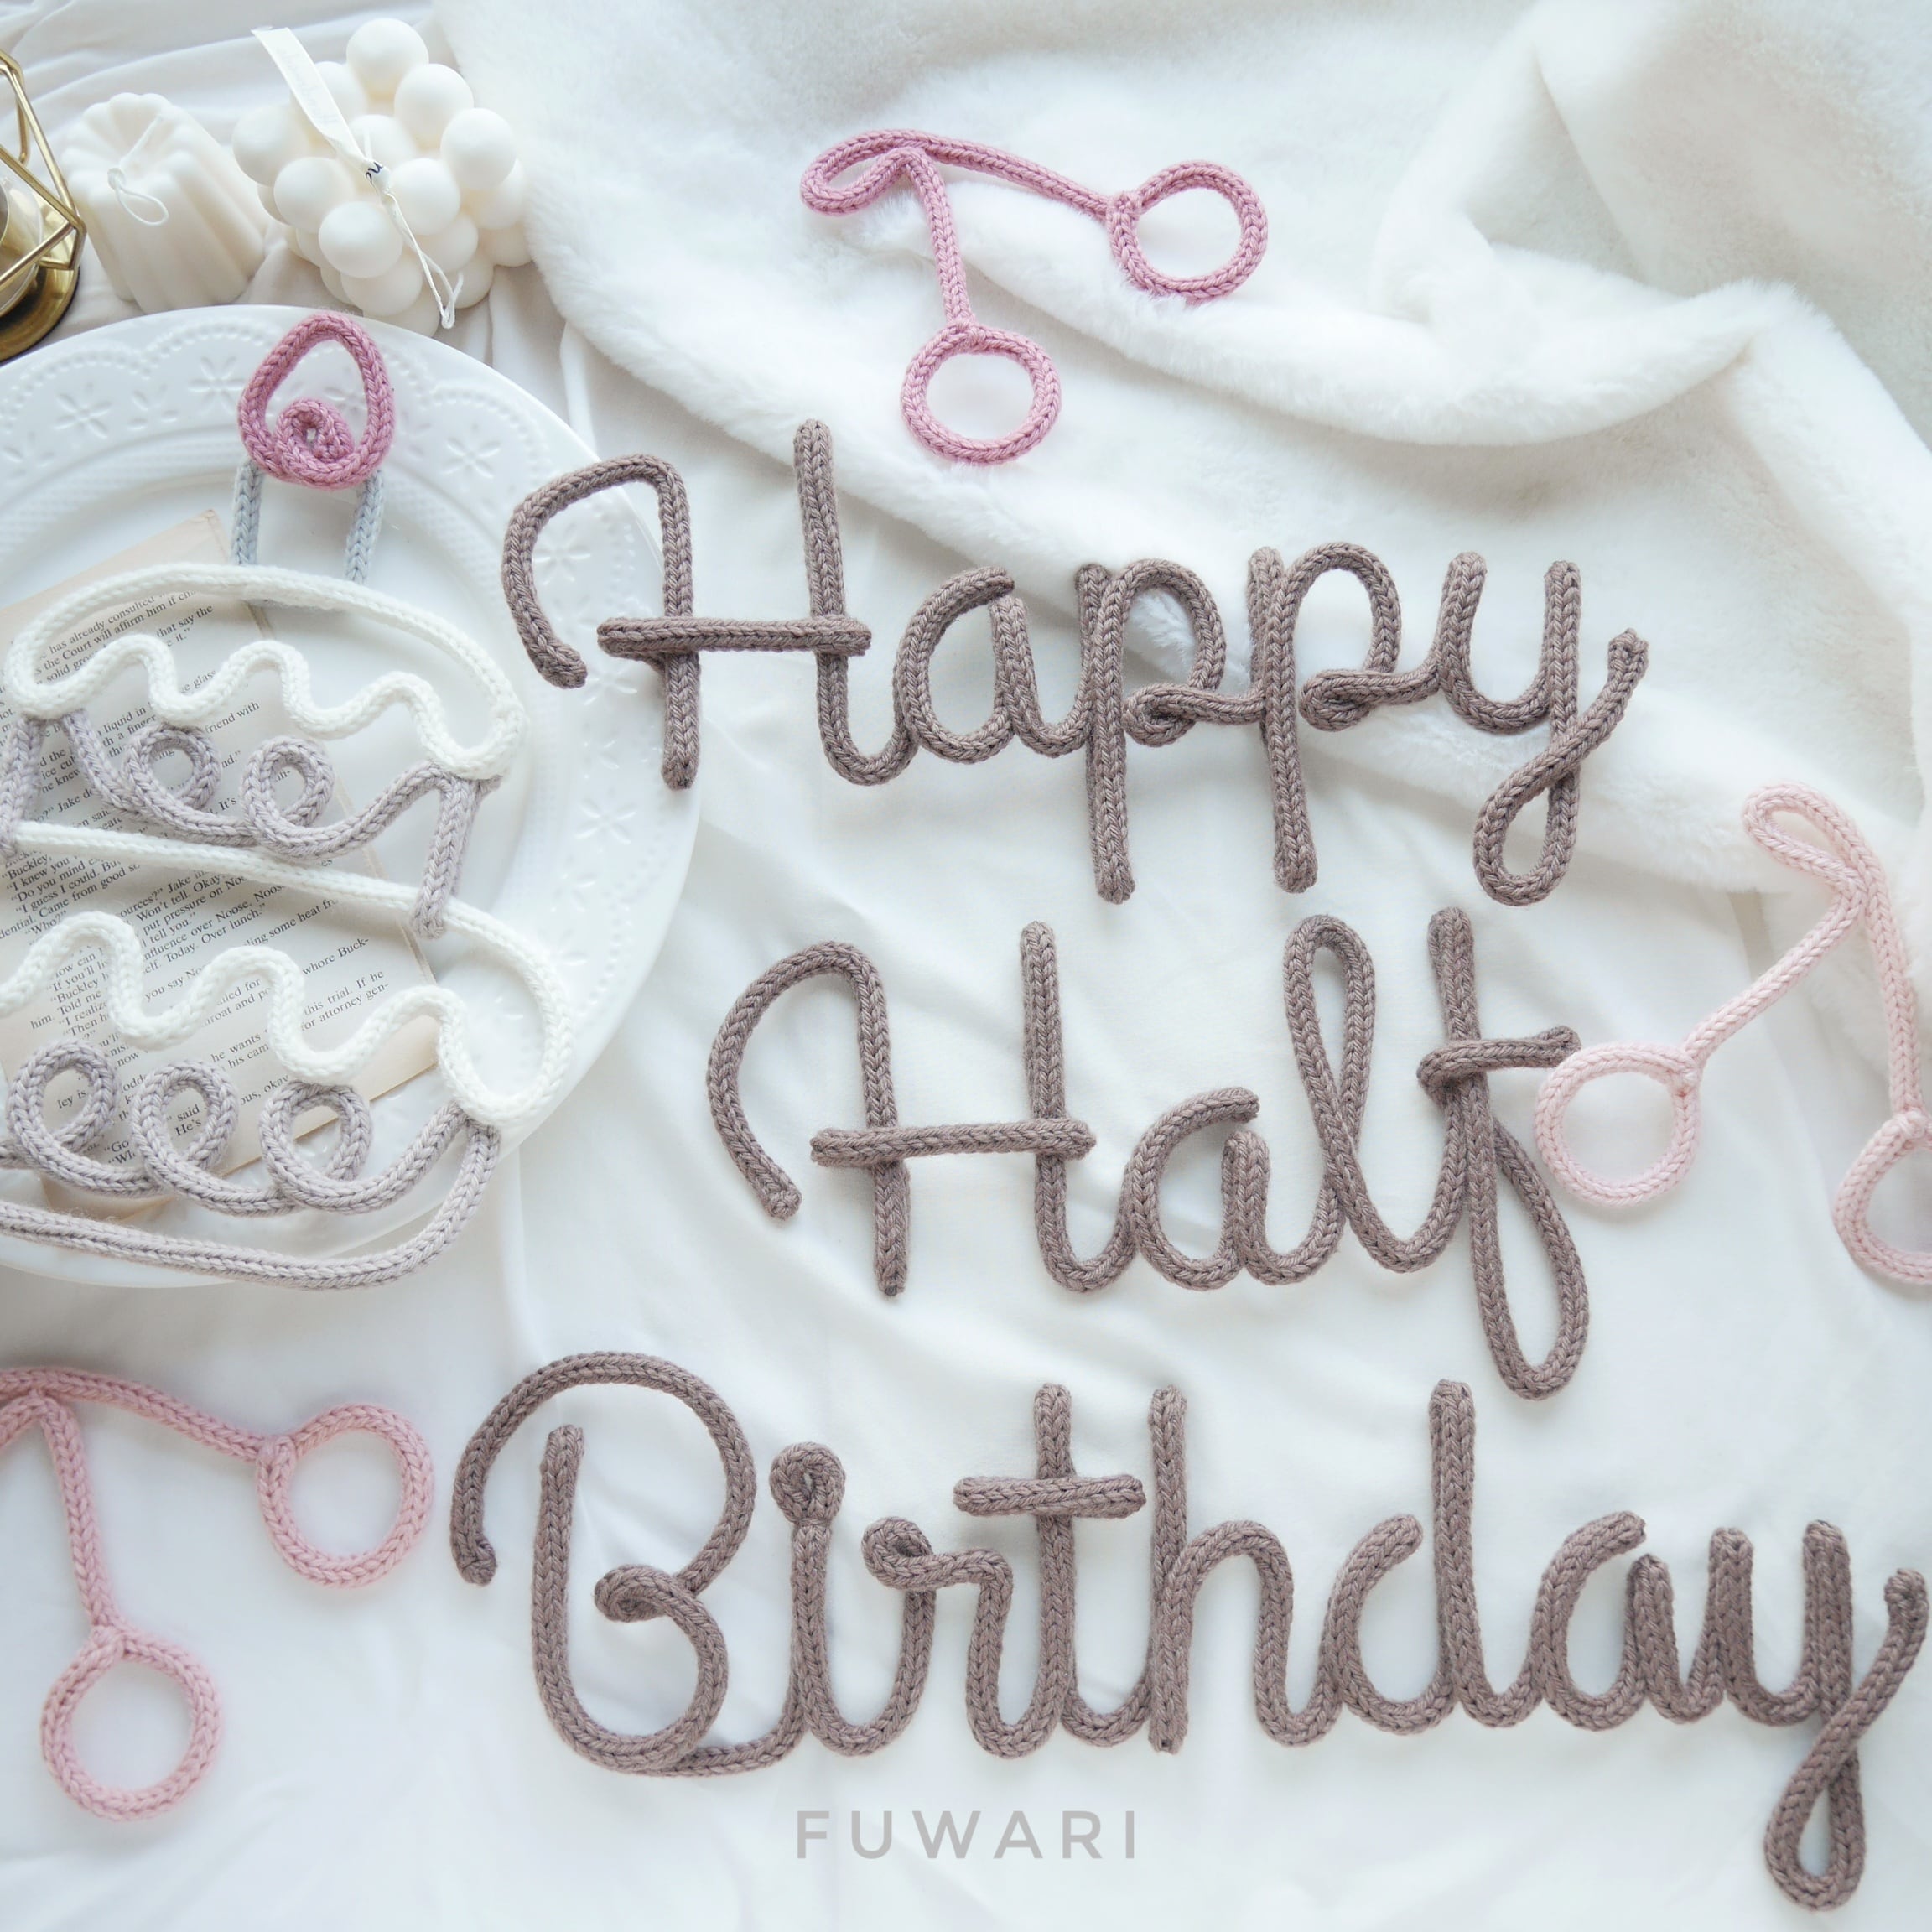 Happy (Half) Birthdayウールレター | fuwari